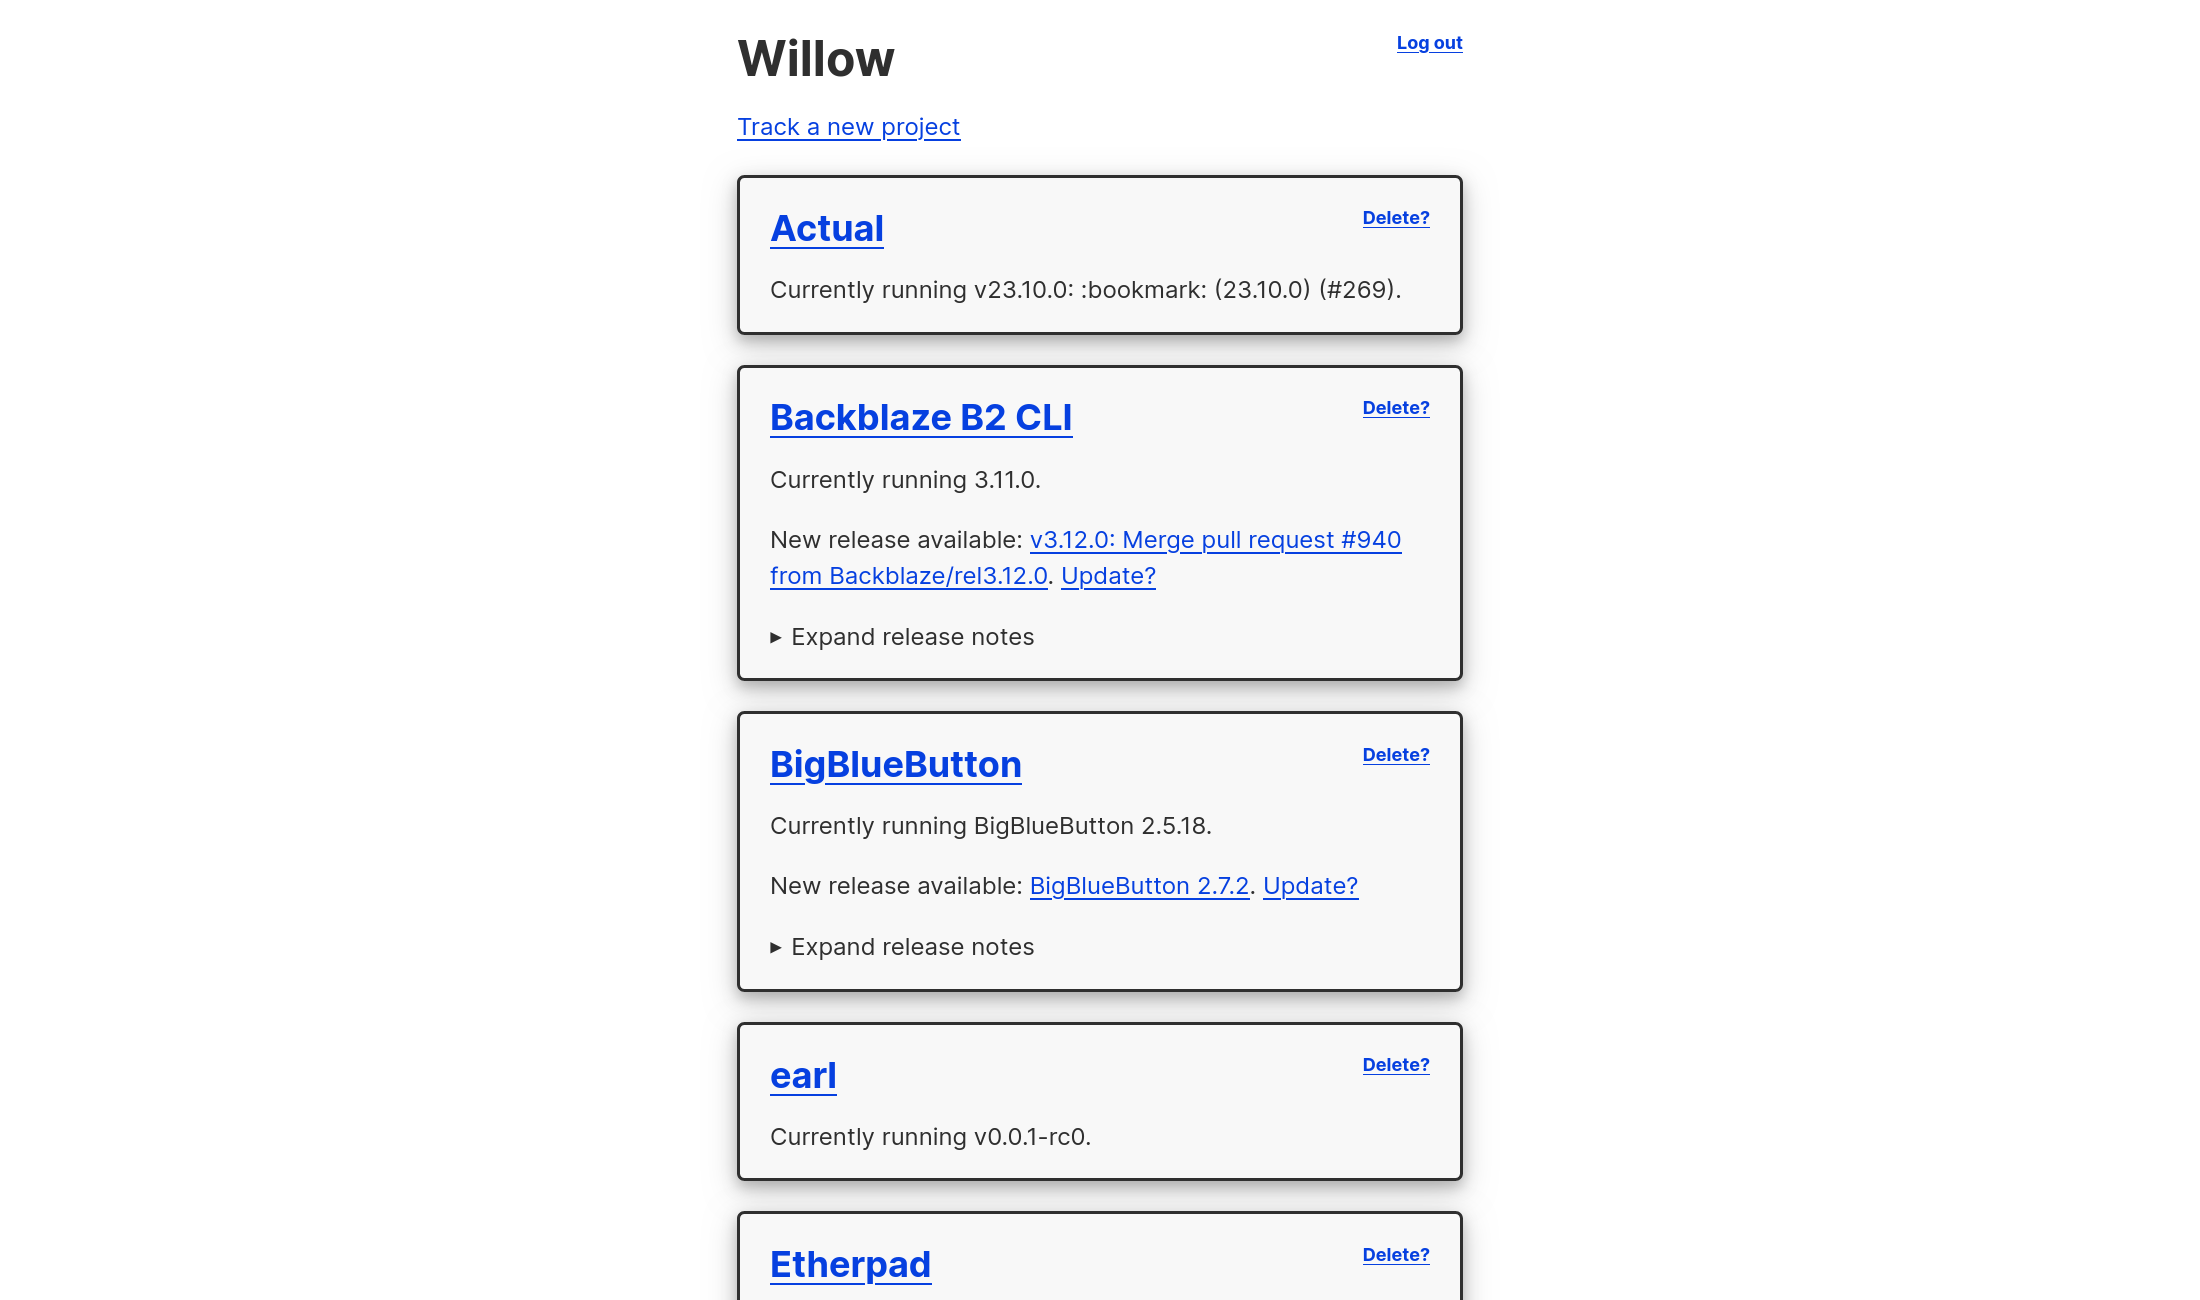 screenshot of willow's current web UI